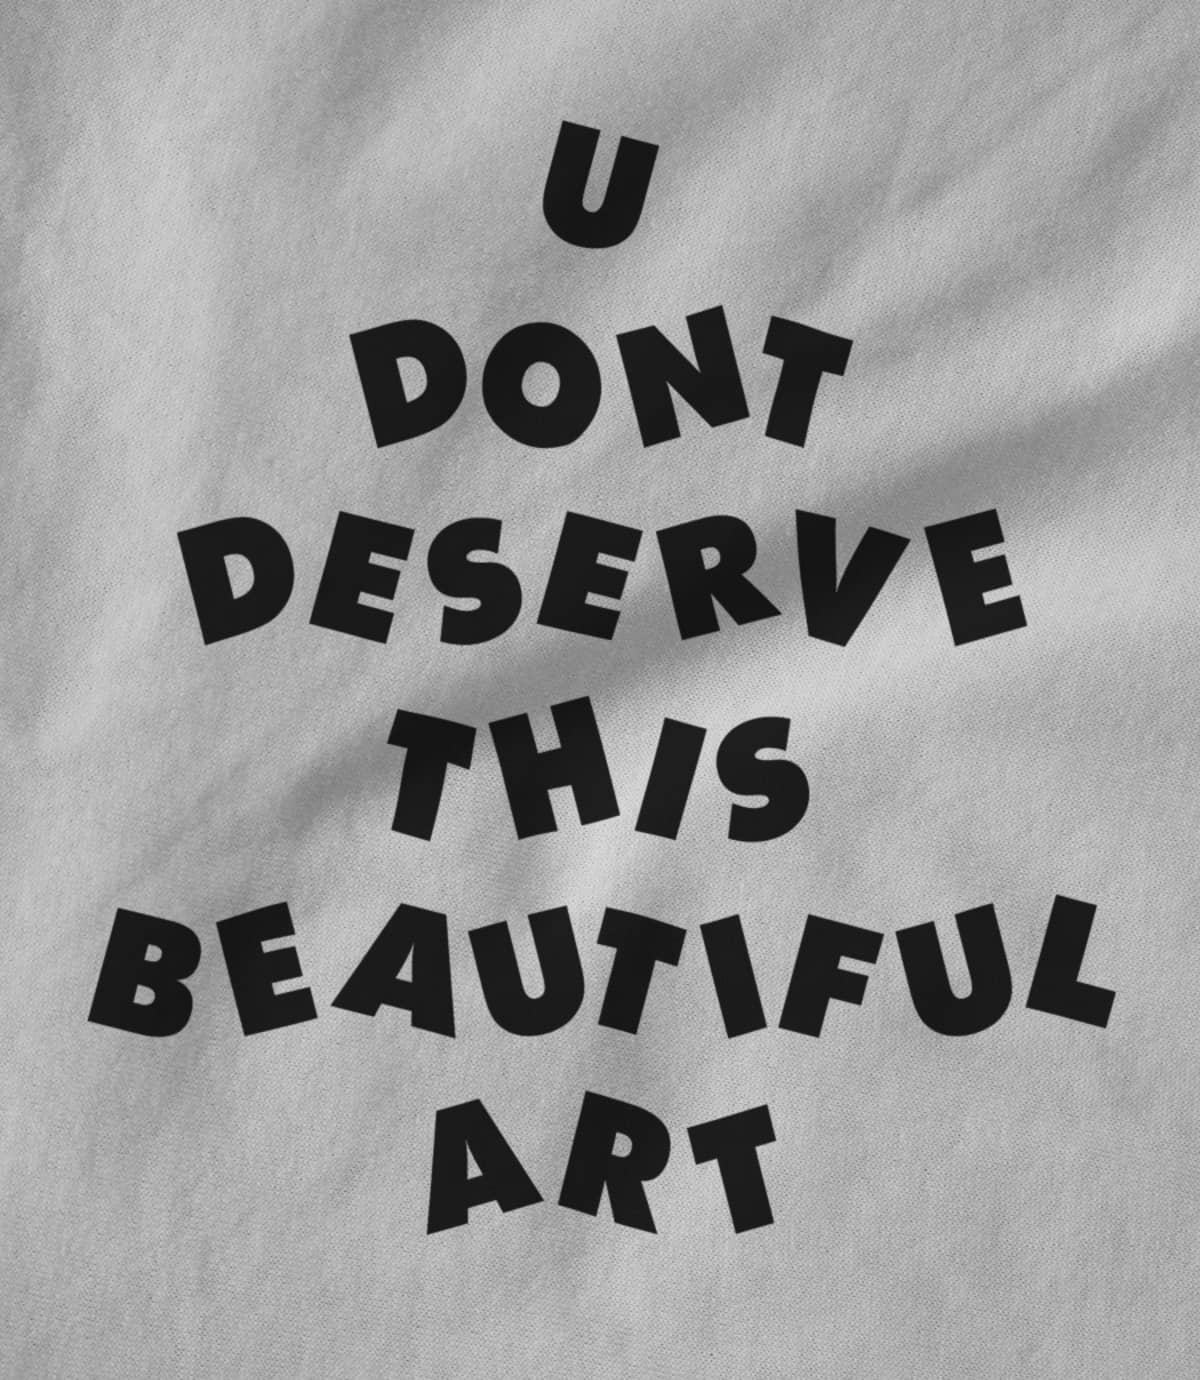 U don t deserve this beautiful art uddtba logo 1514688270